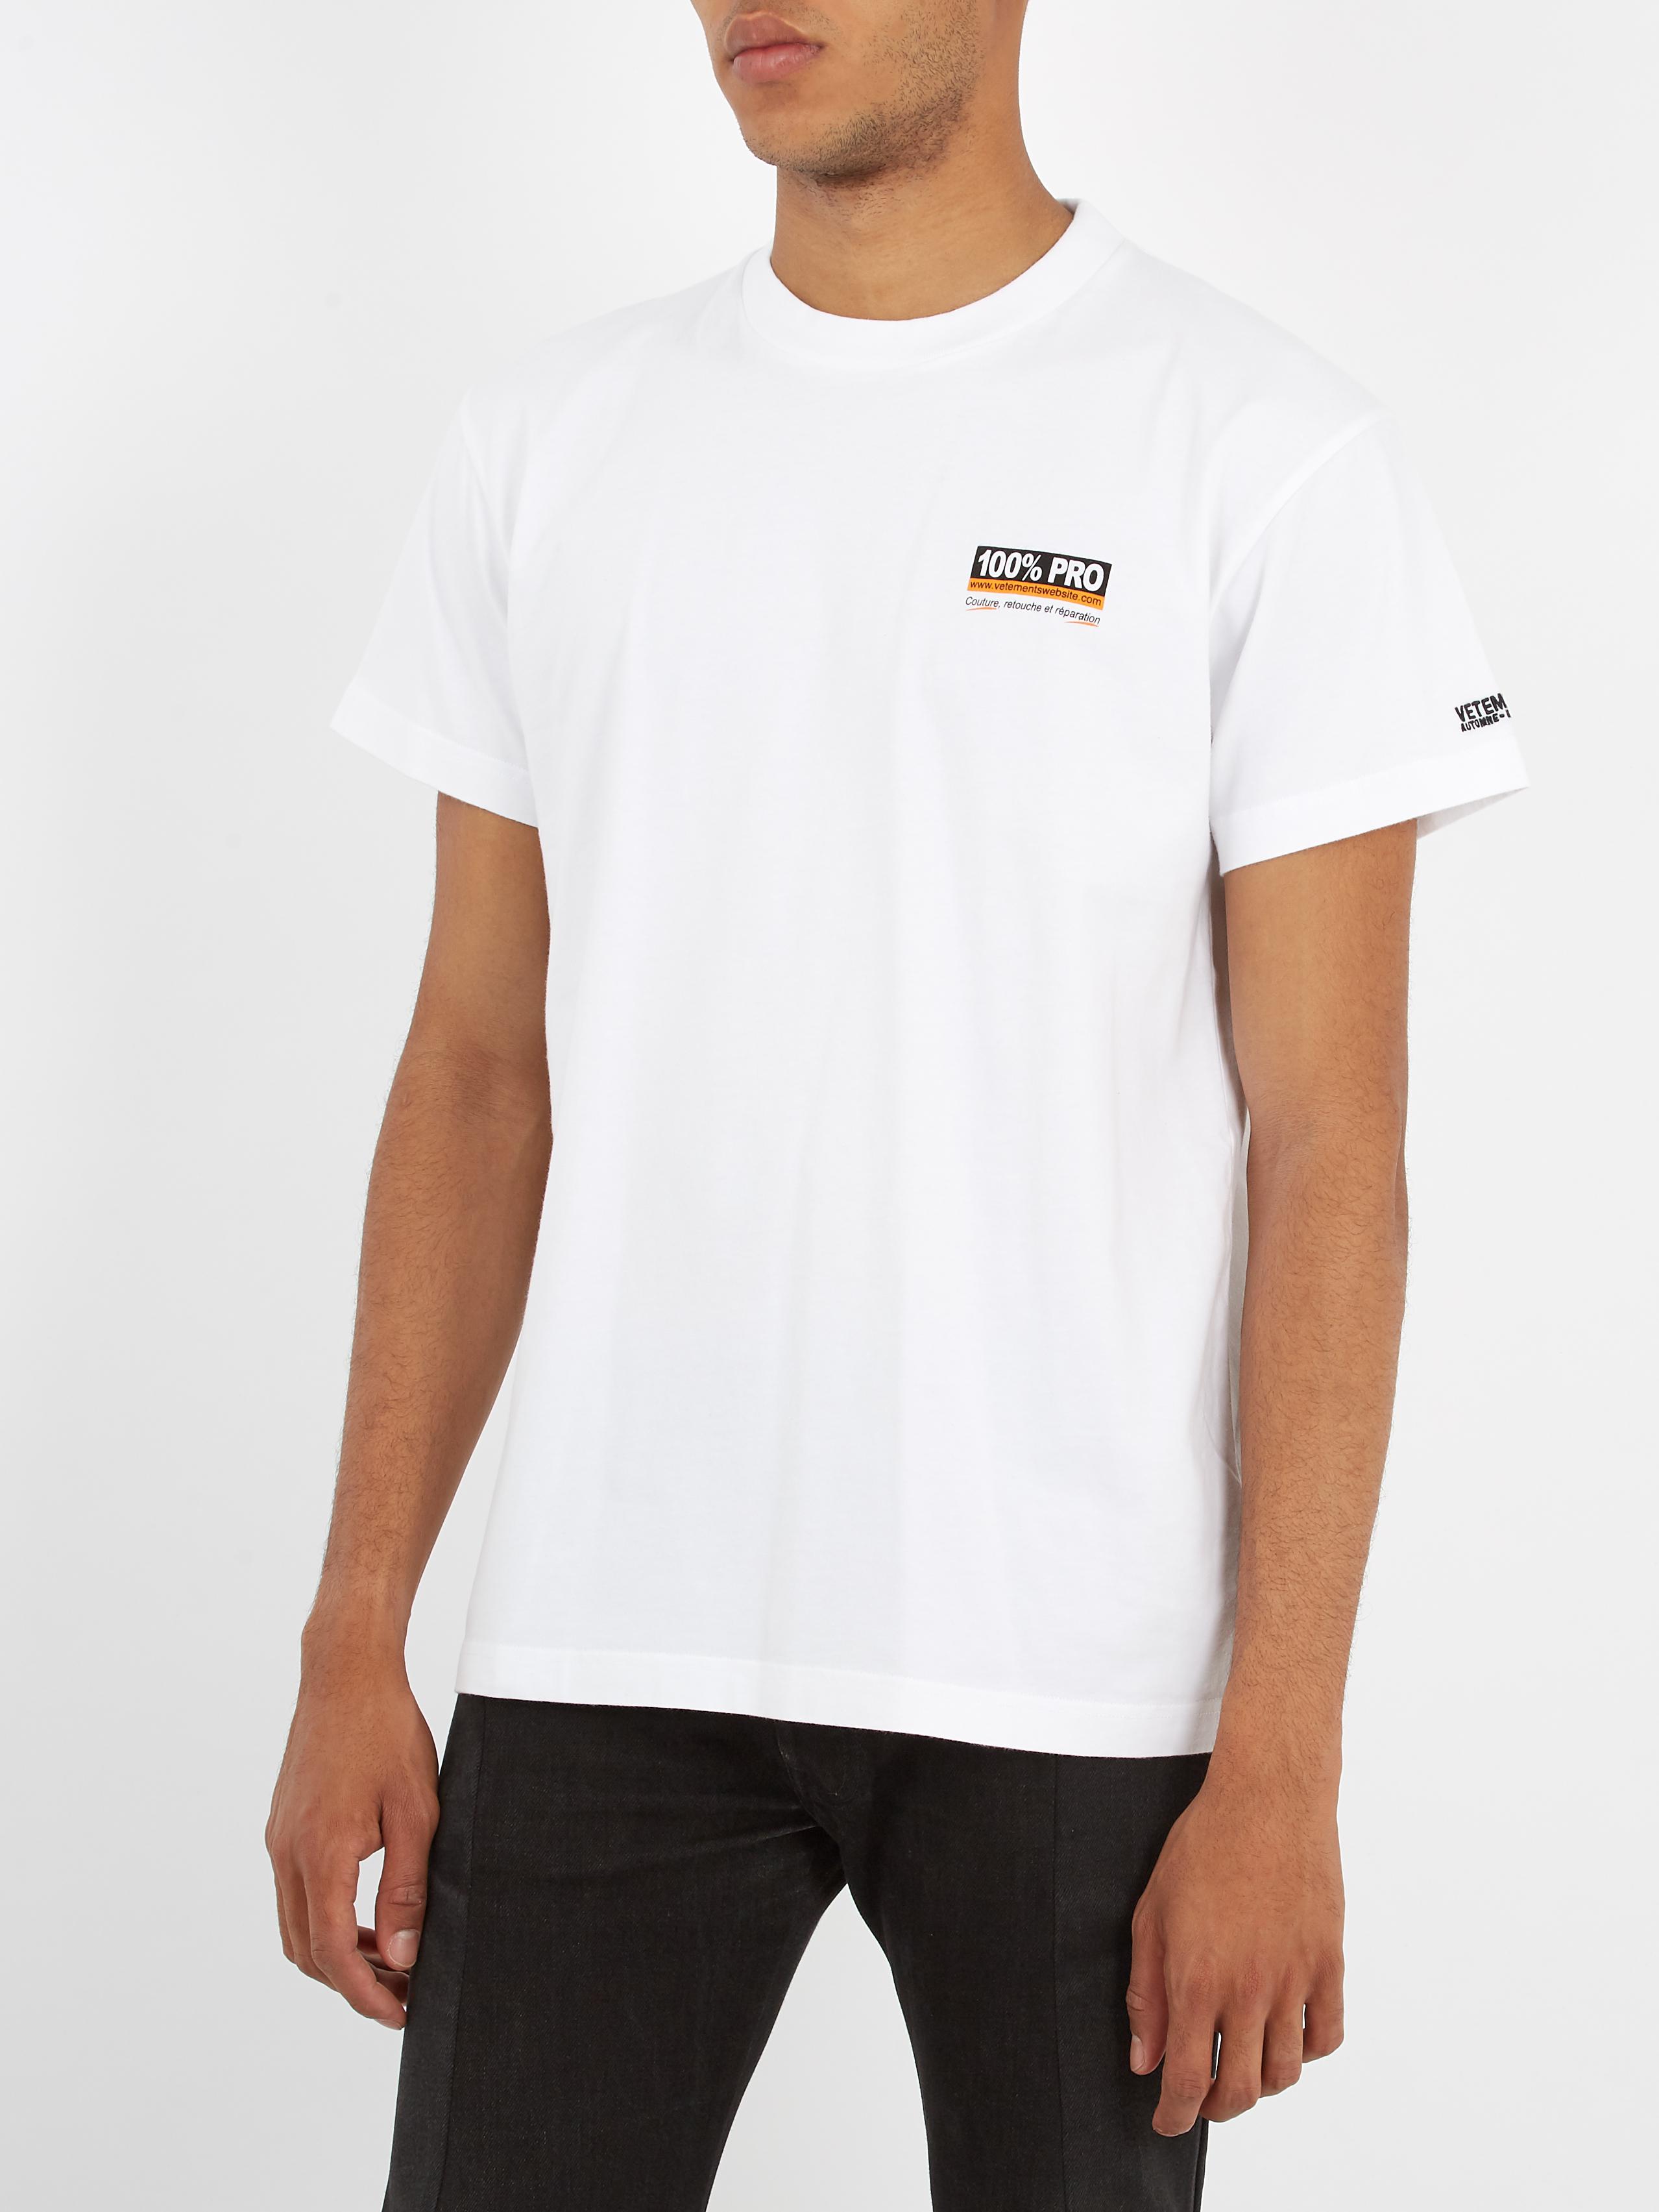 Vetements 100% Pro Cotton T-shirt in White for Men | Lyst